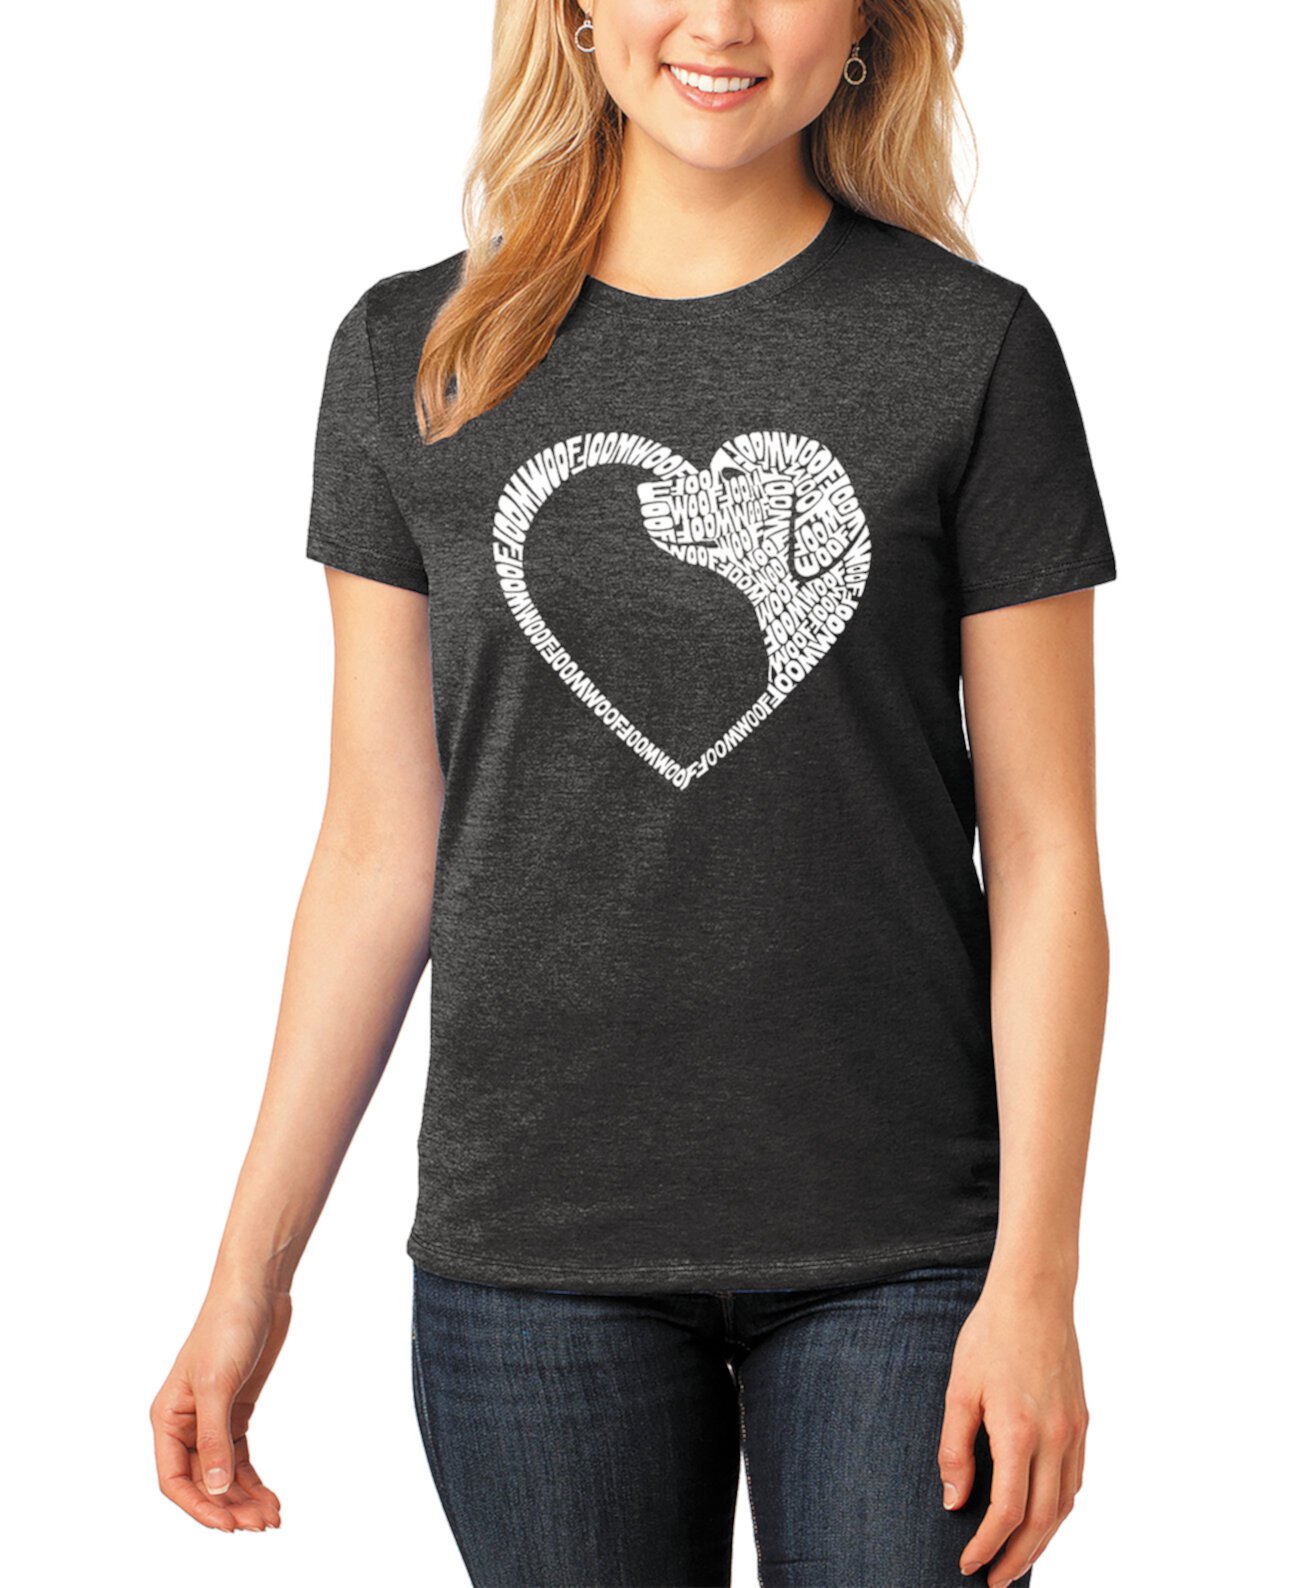 Женская футболка Dog Heart Premium Blend Word Art с короткими рукавами LA Pop Art